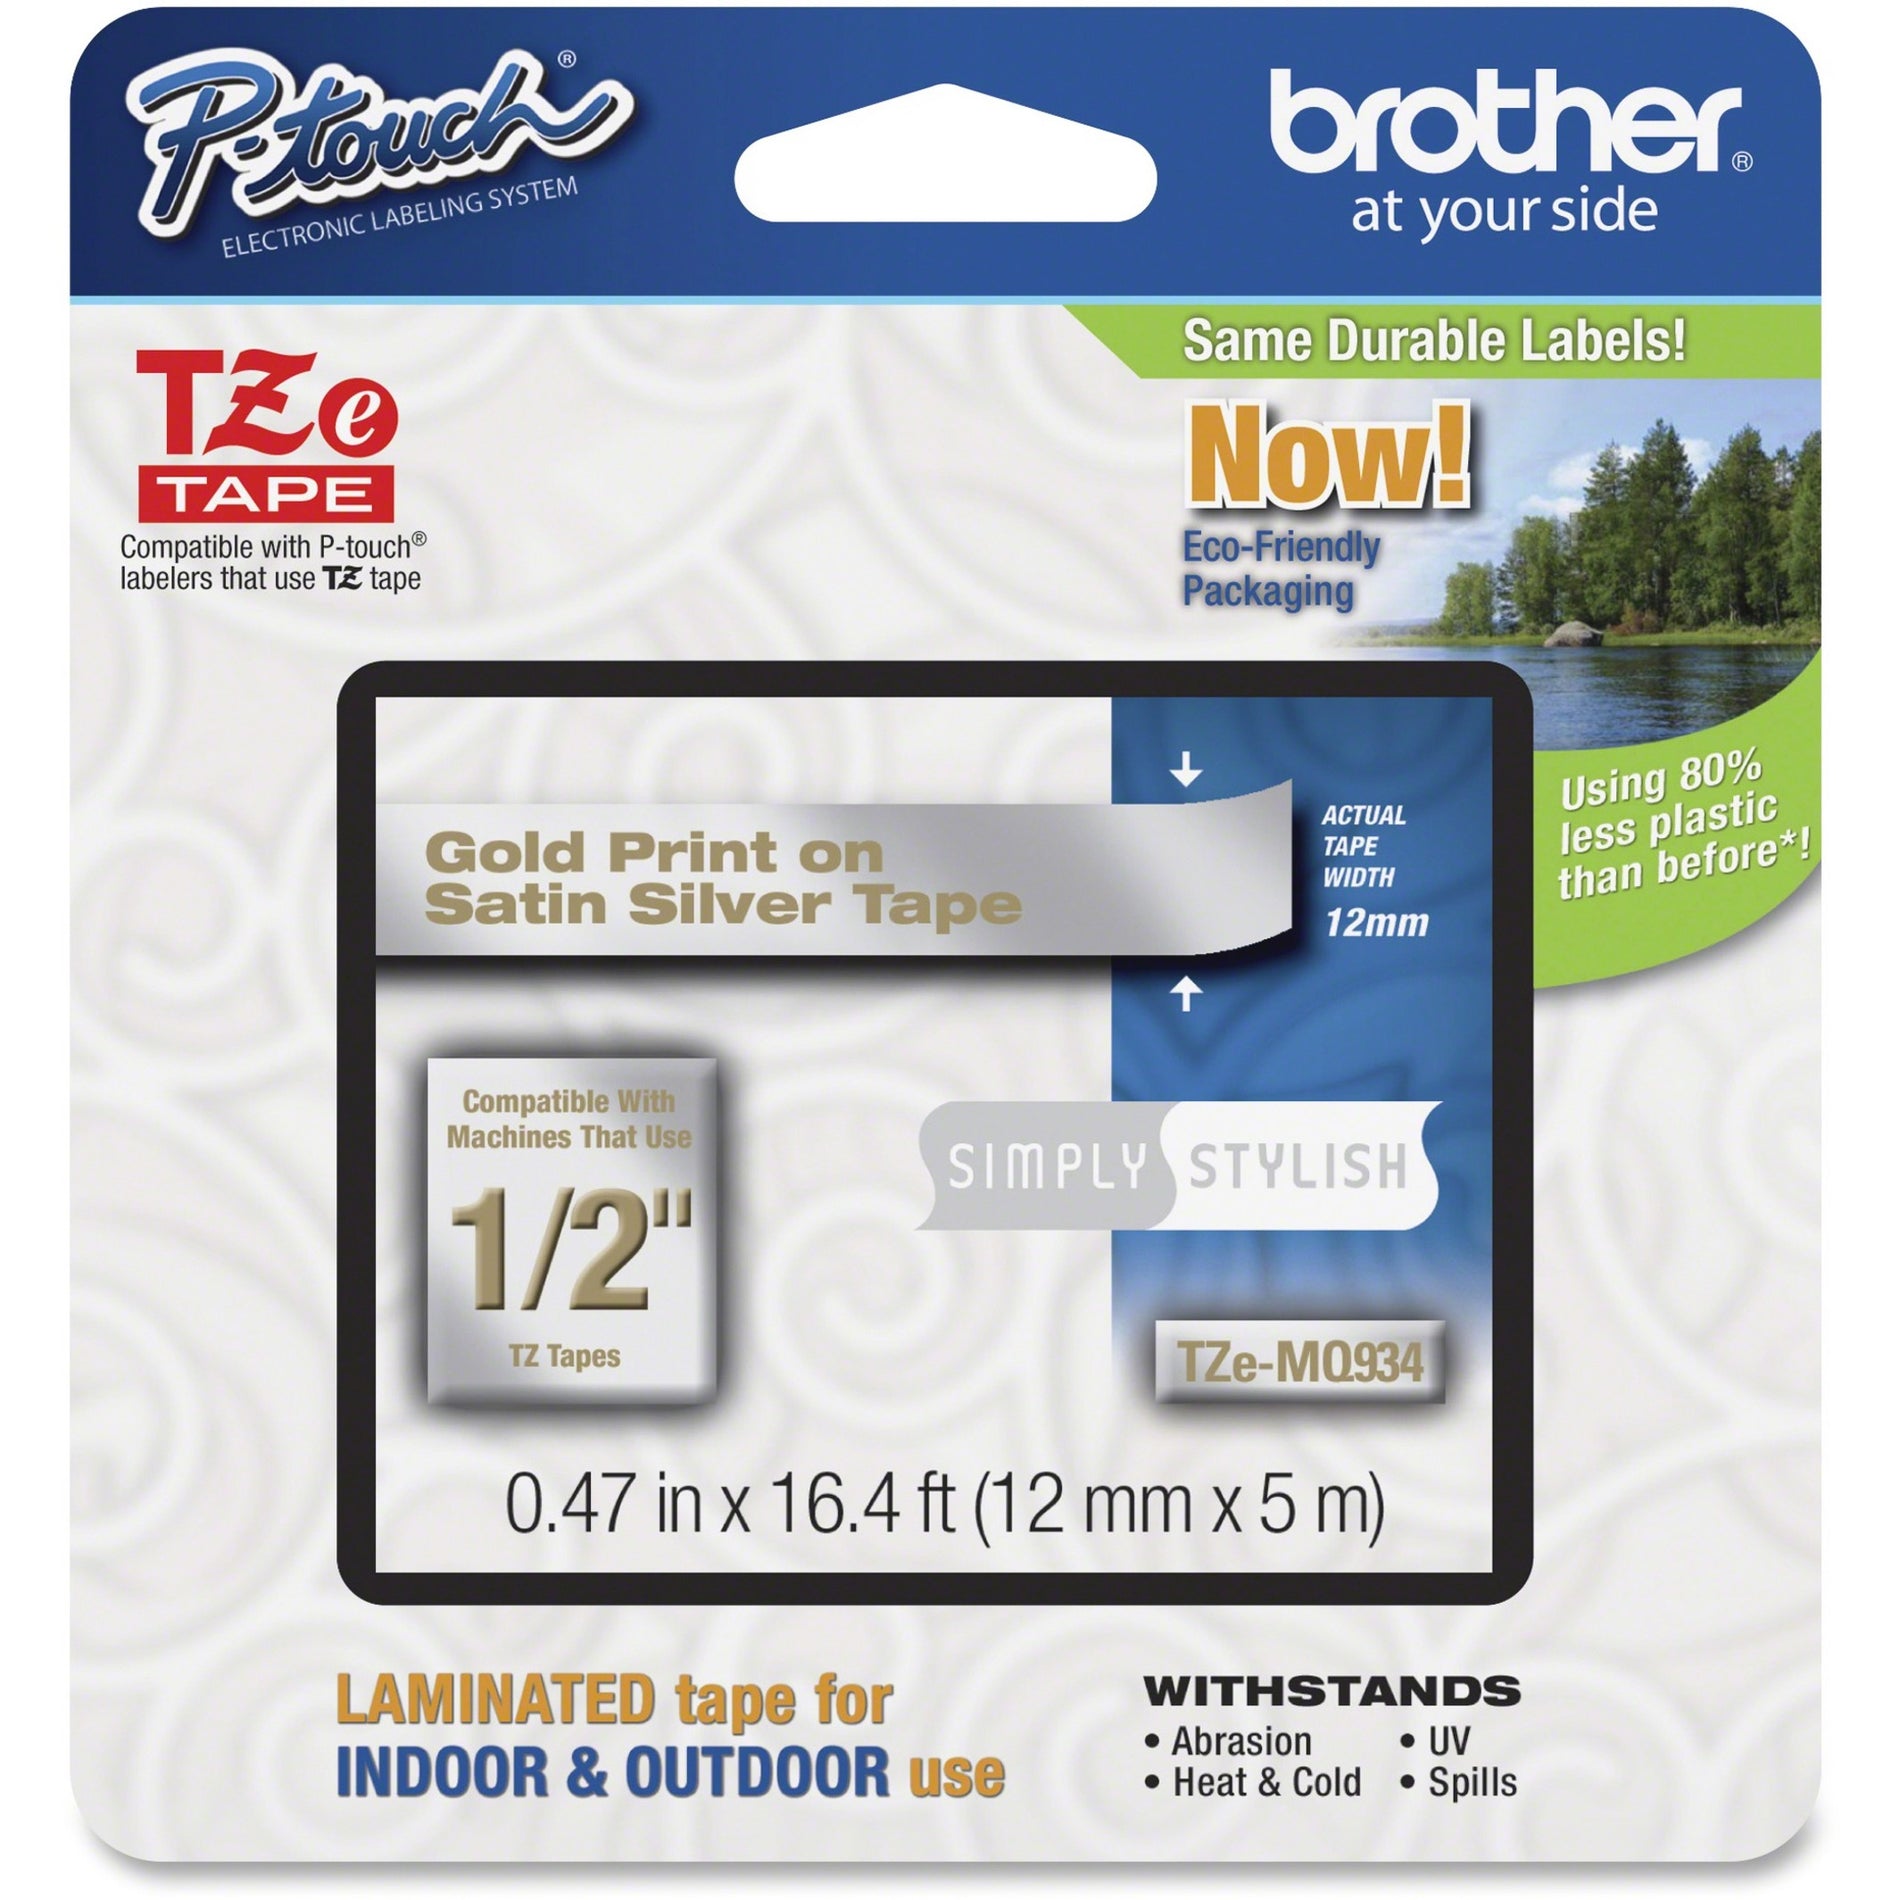 Brother TZEMQ934 P-Touch TZe Laminate带，金色/雾面银色，12mm 兄弟